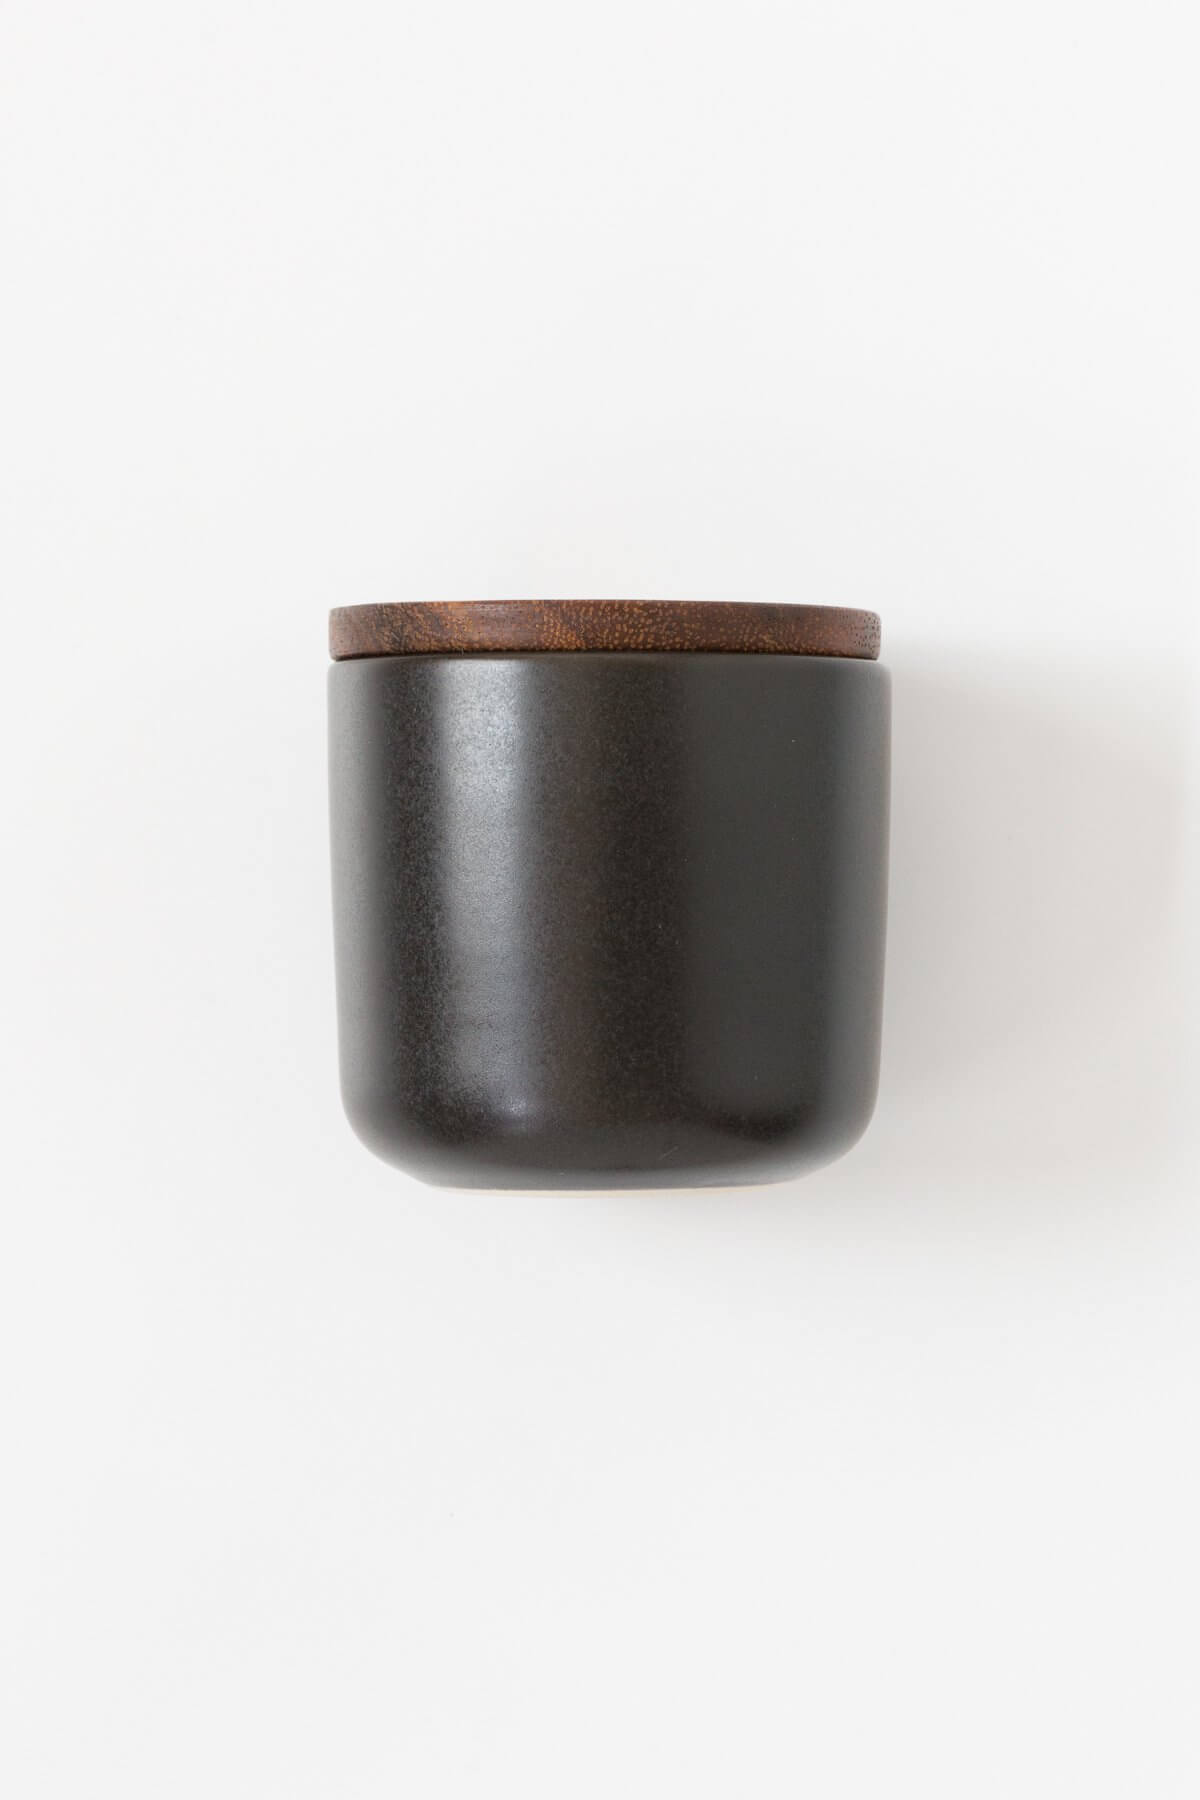 Be Home Stoneware Black Ceramic Container